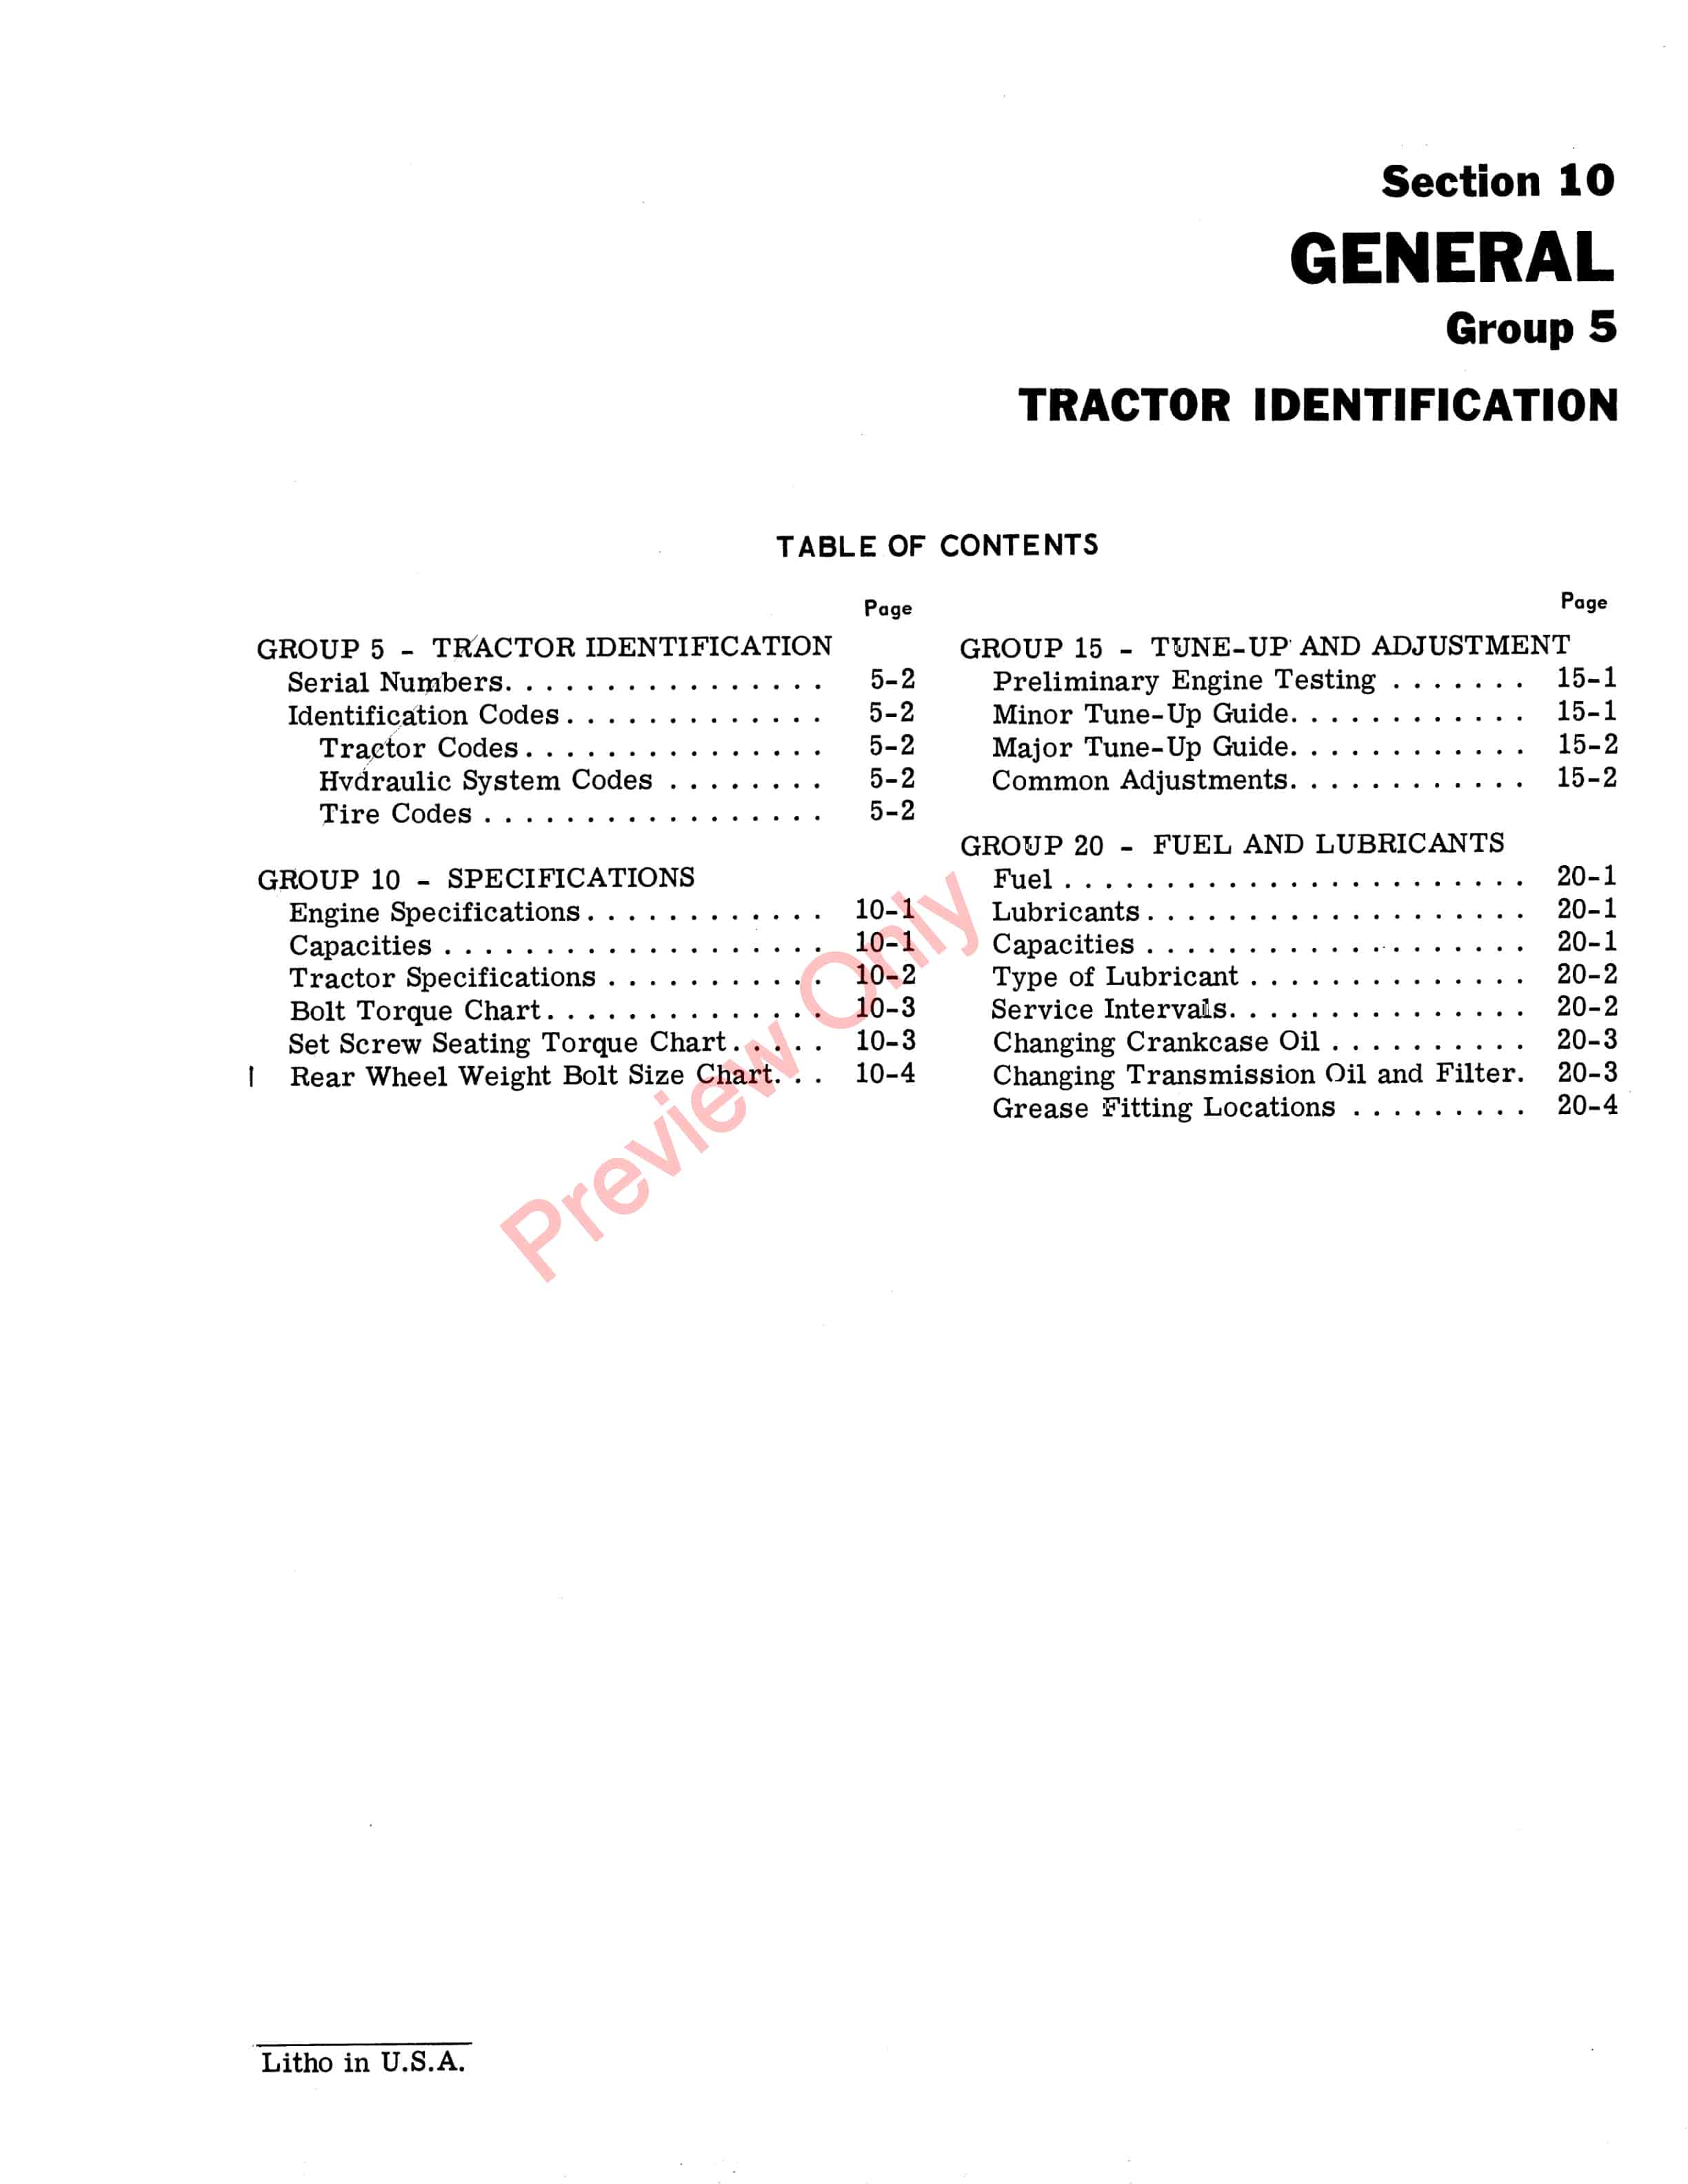 John Deere 140 Hydrostatic Tractor Service Manual SM2086 01AUG70 5